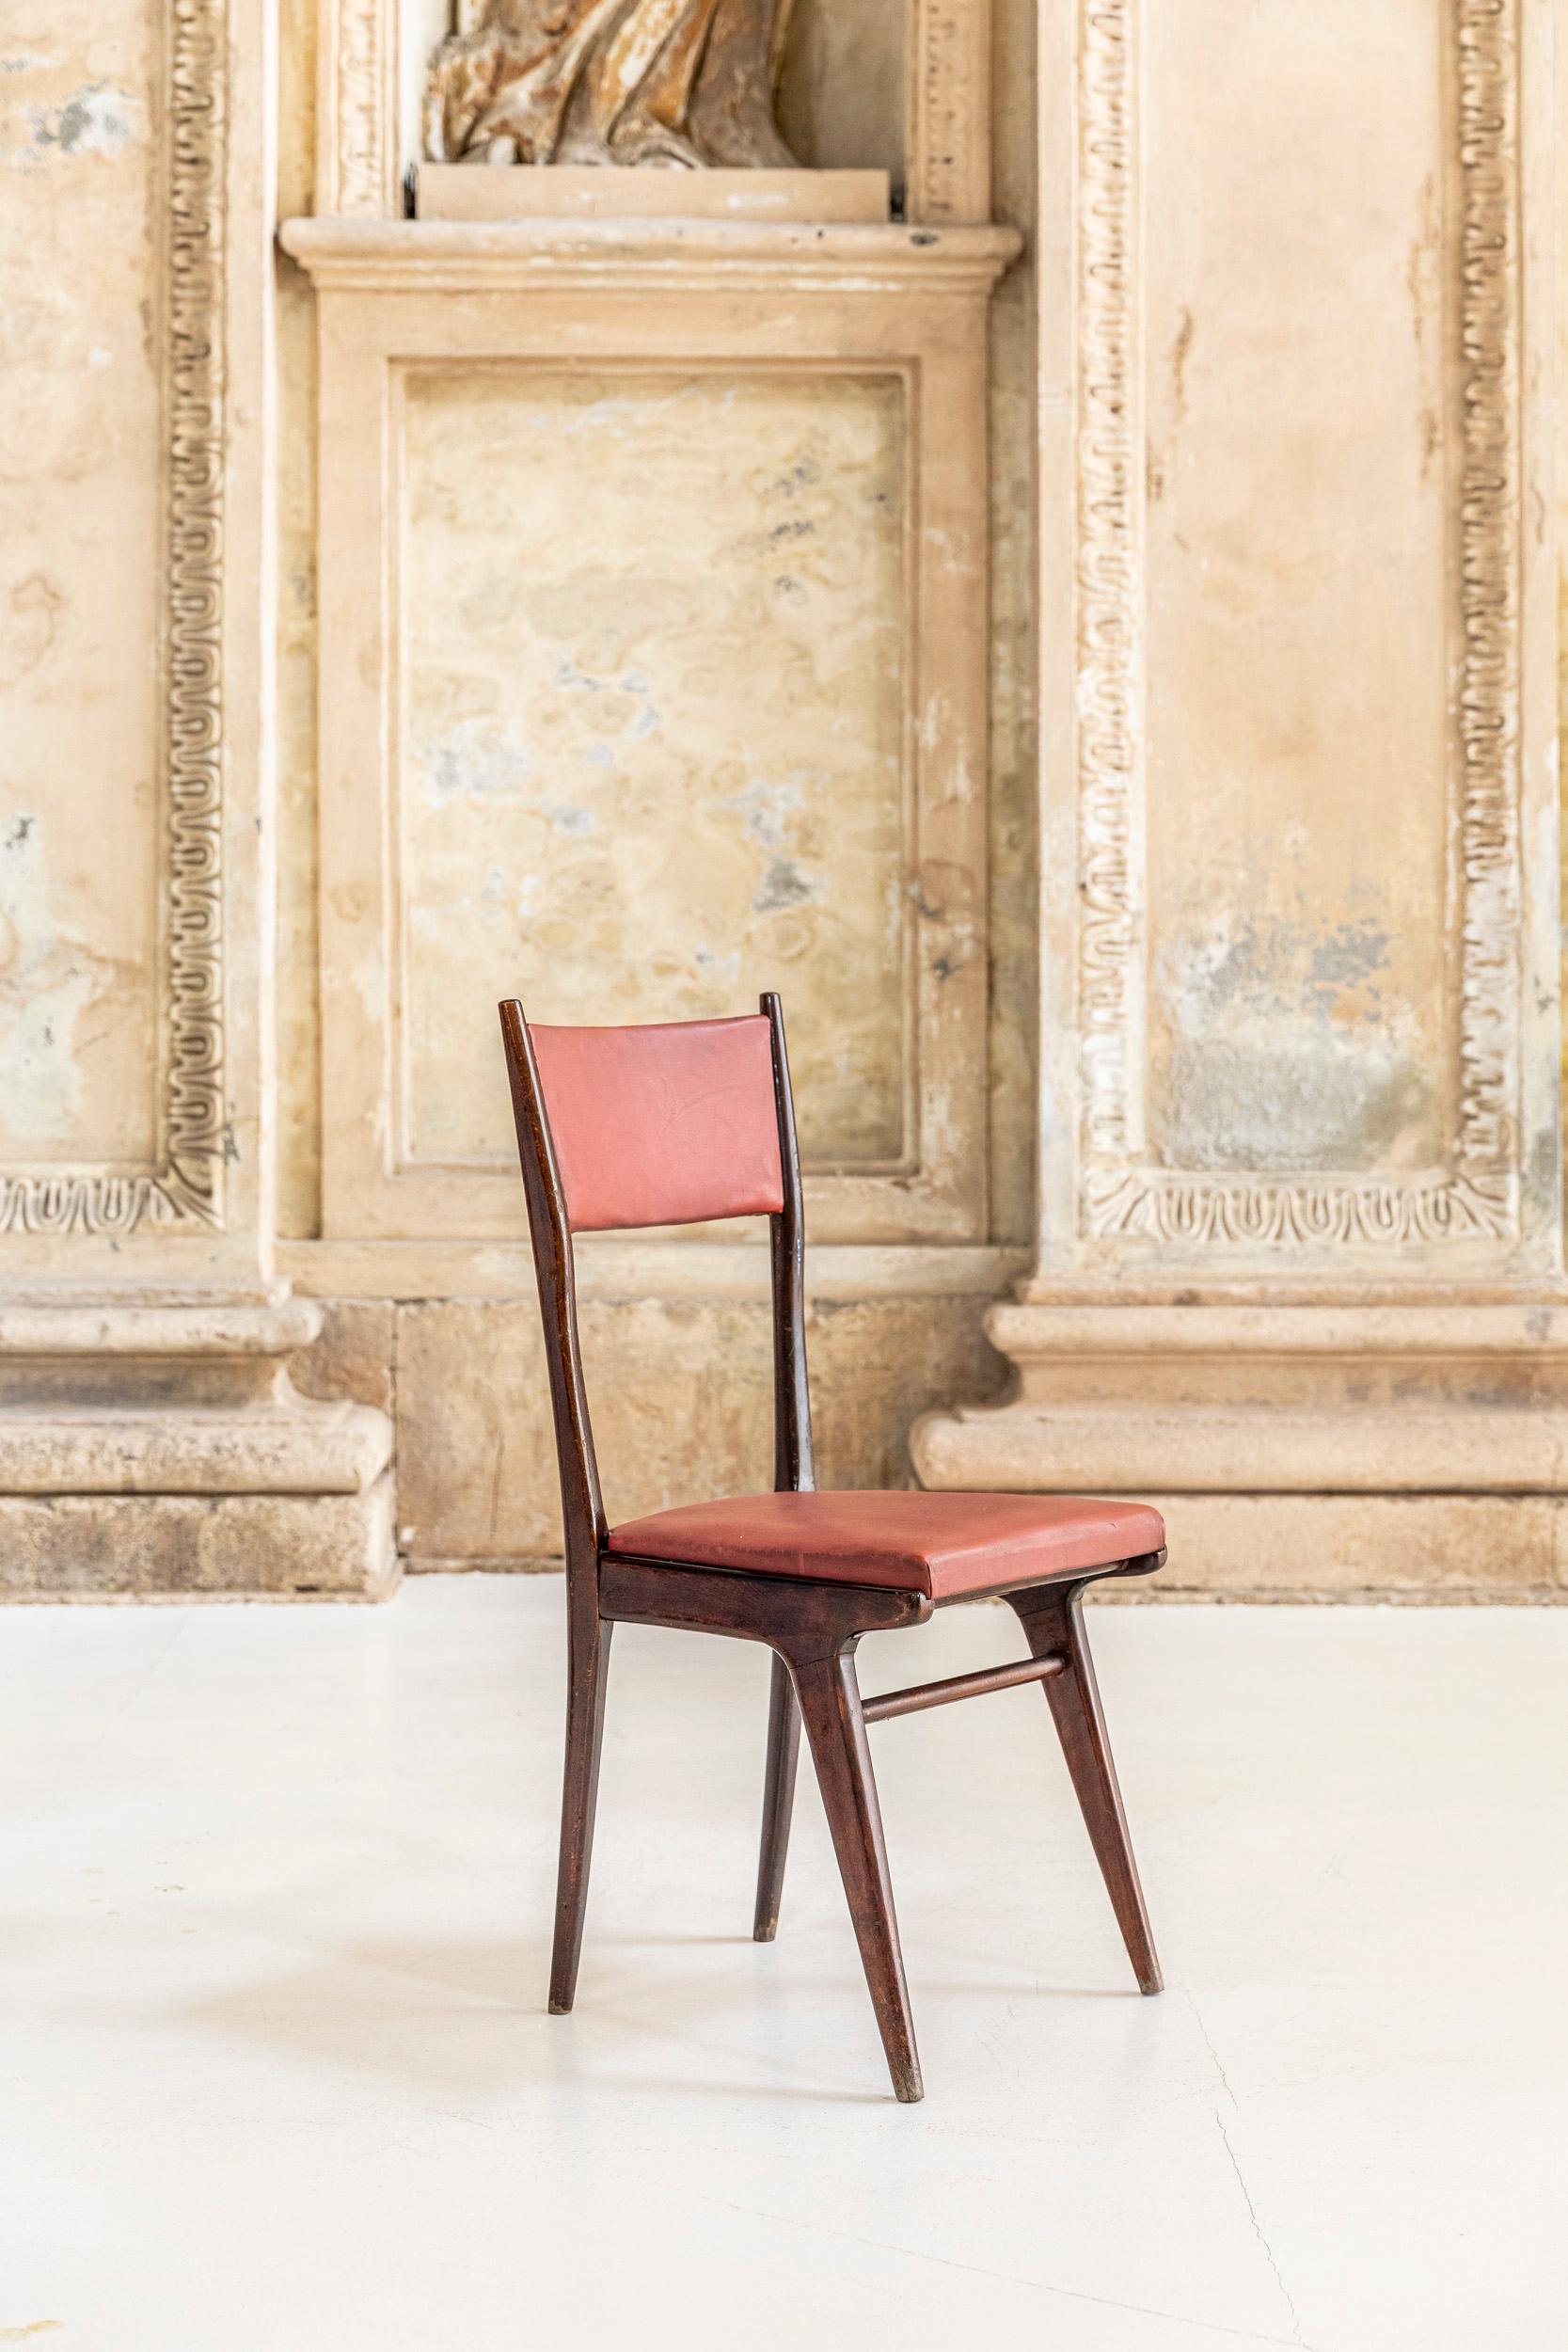 Italian Set of Ten Chairs Mod. 693 Attributed to Carlo de Carli